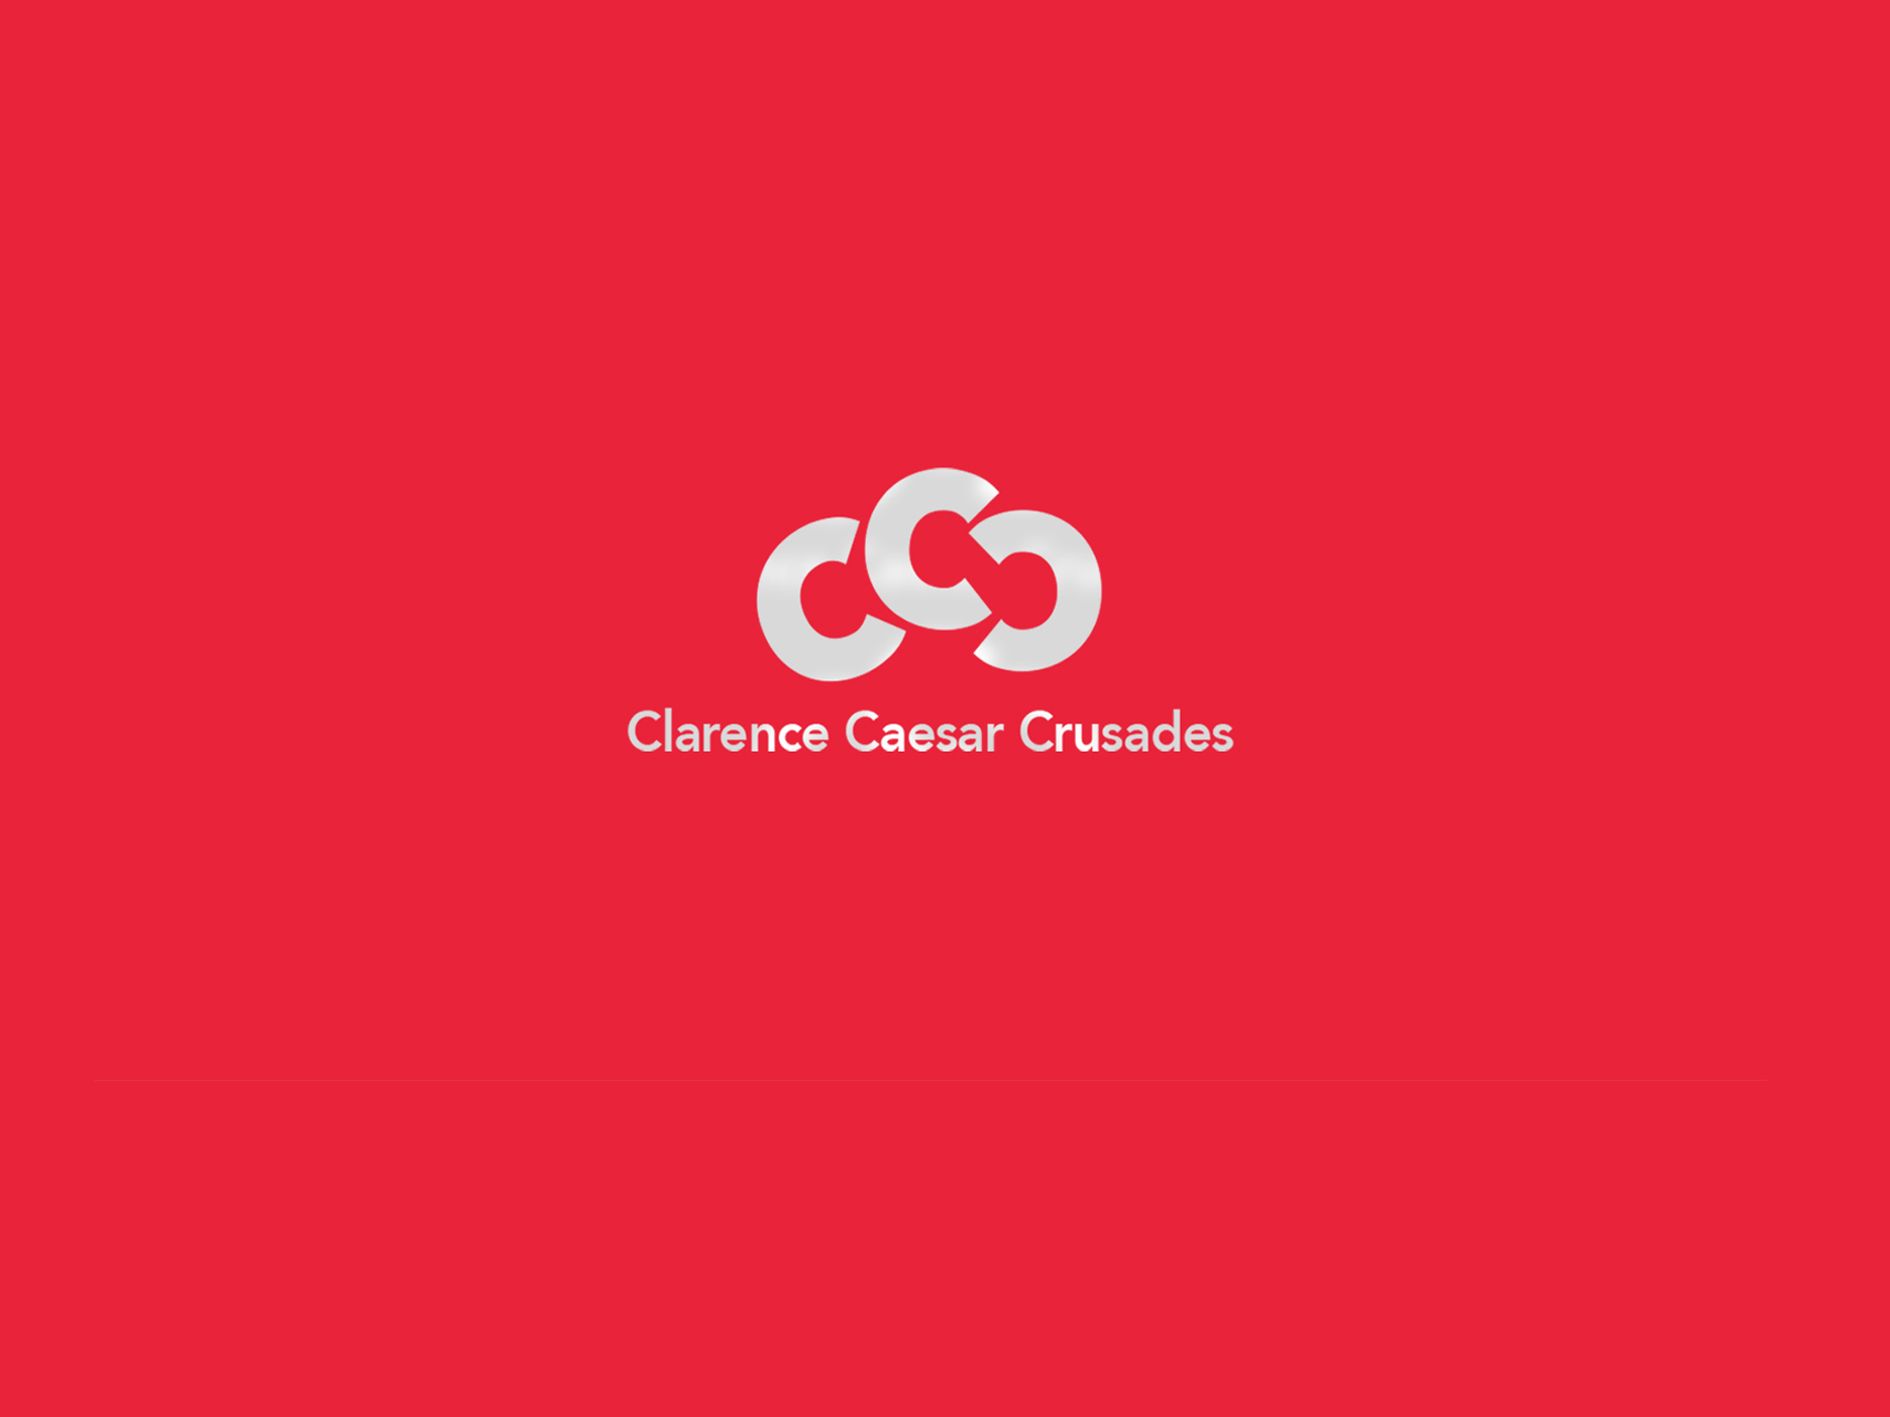 CLARENCE CAESAR CRUSADES